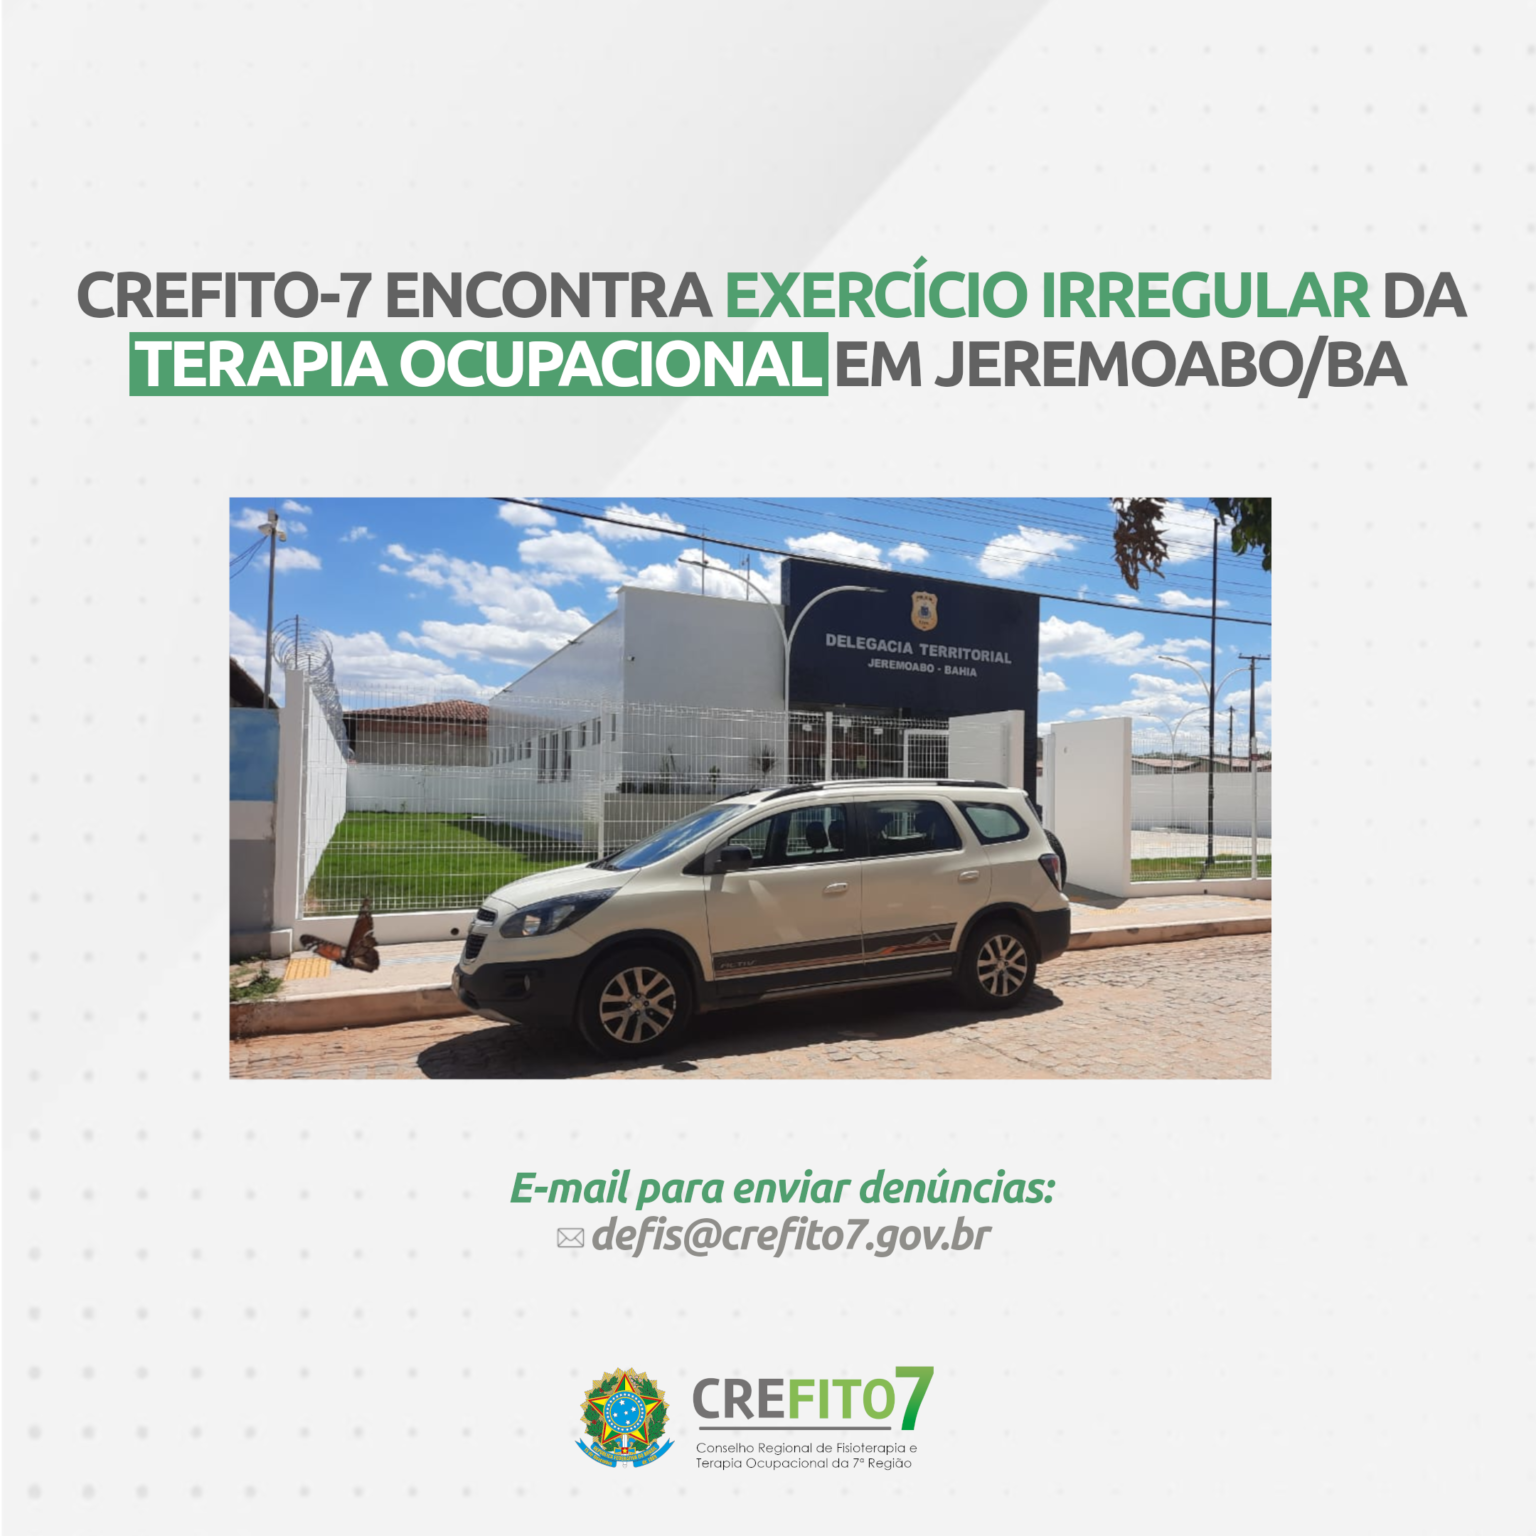 CREFITO-7 encontra exercício irregular da Terapia Ocupacional no município de Jeremoabo/BA